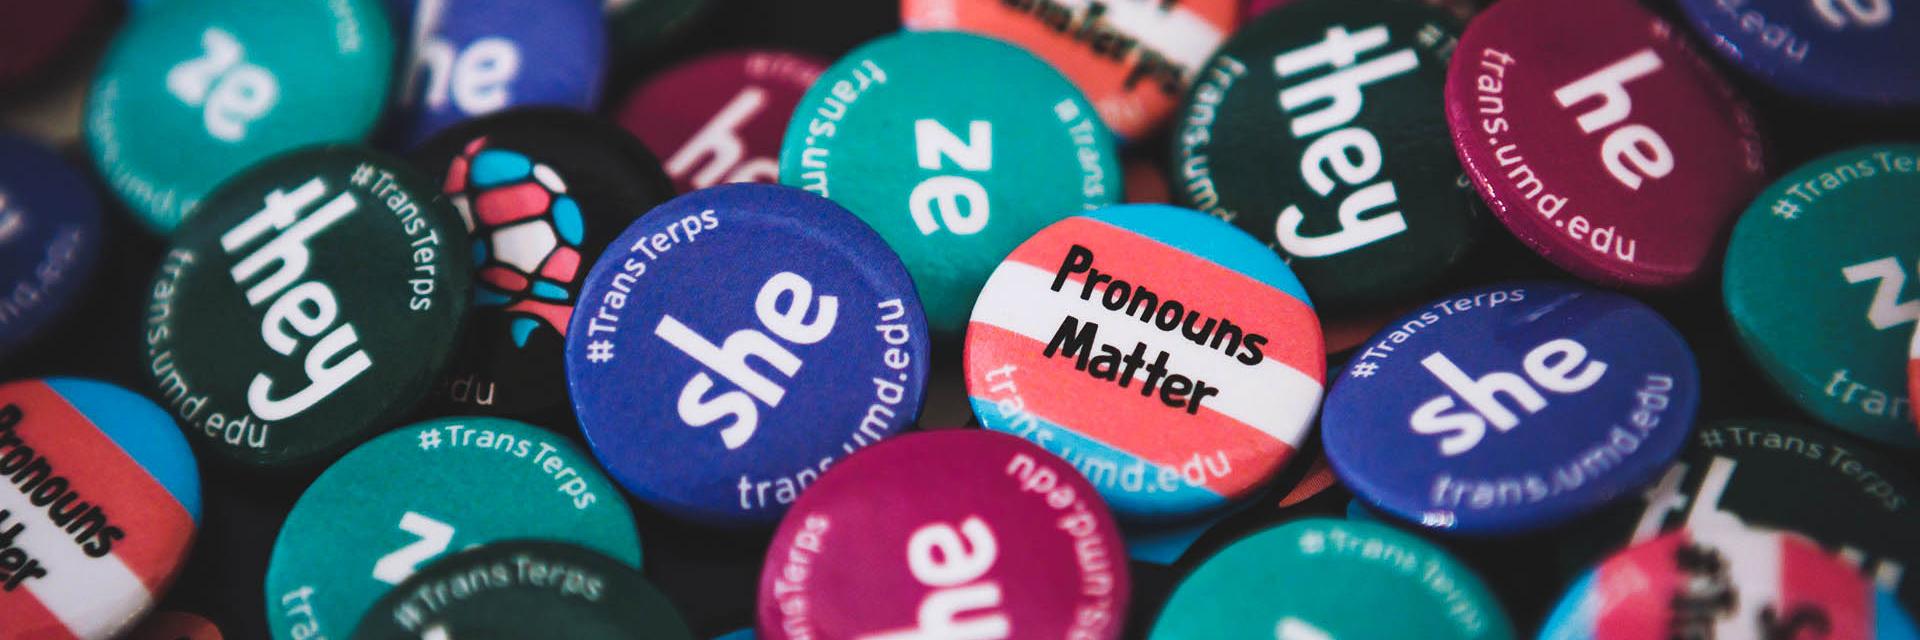 Pronoun buttons for LGBTQ Terps